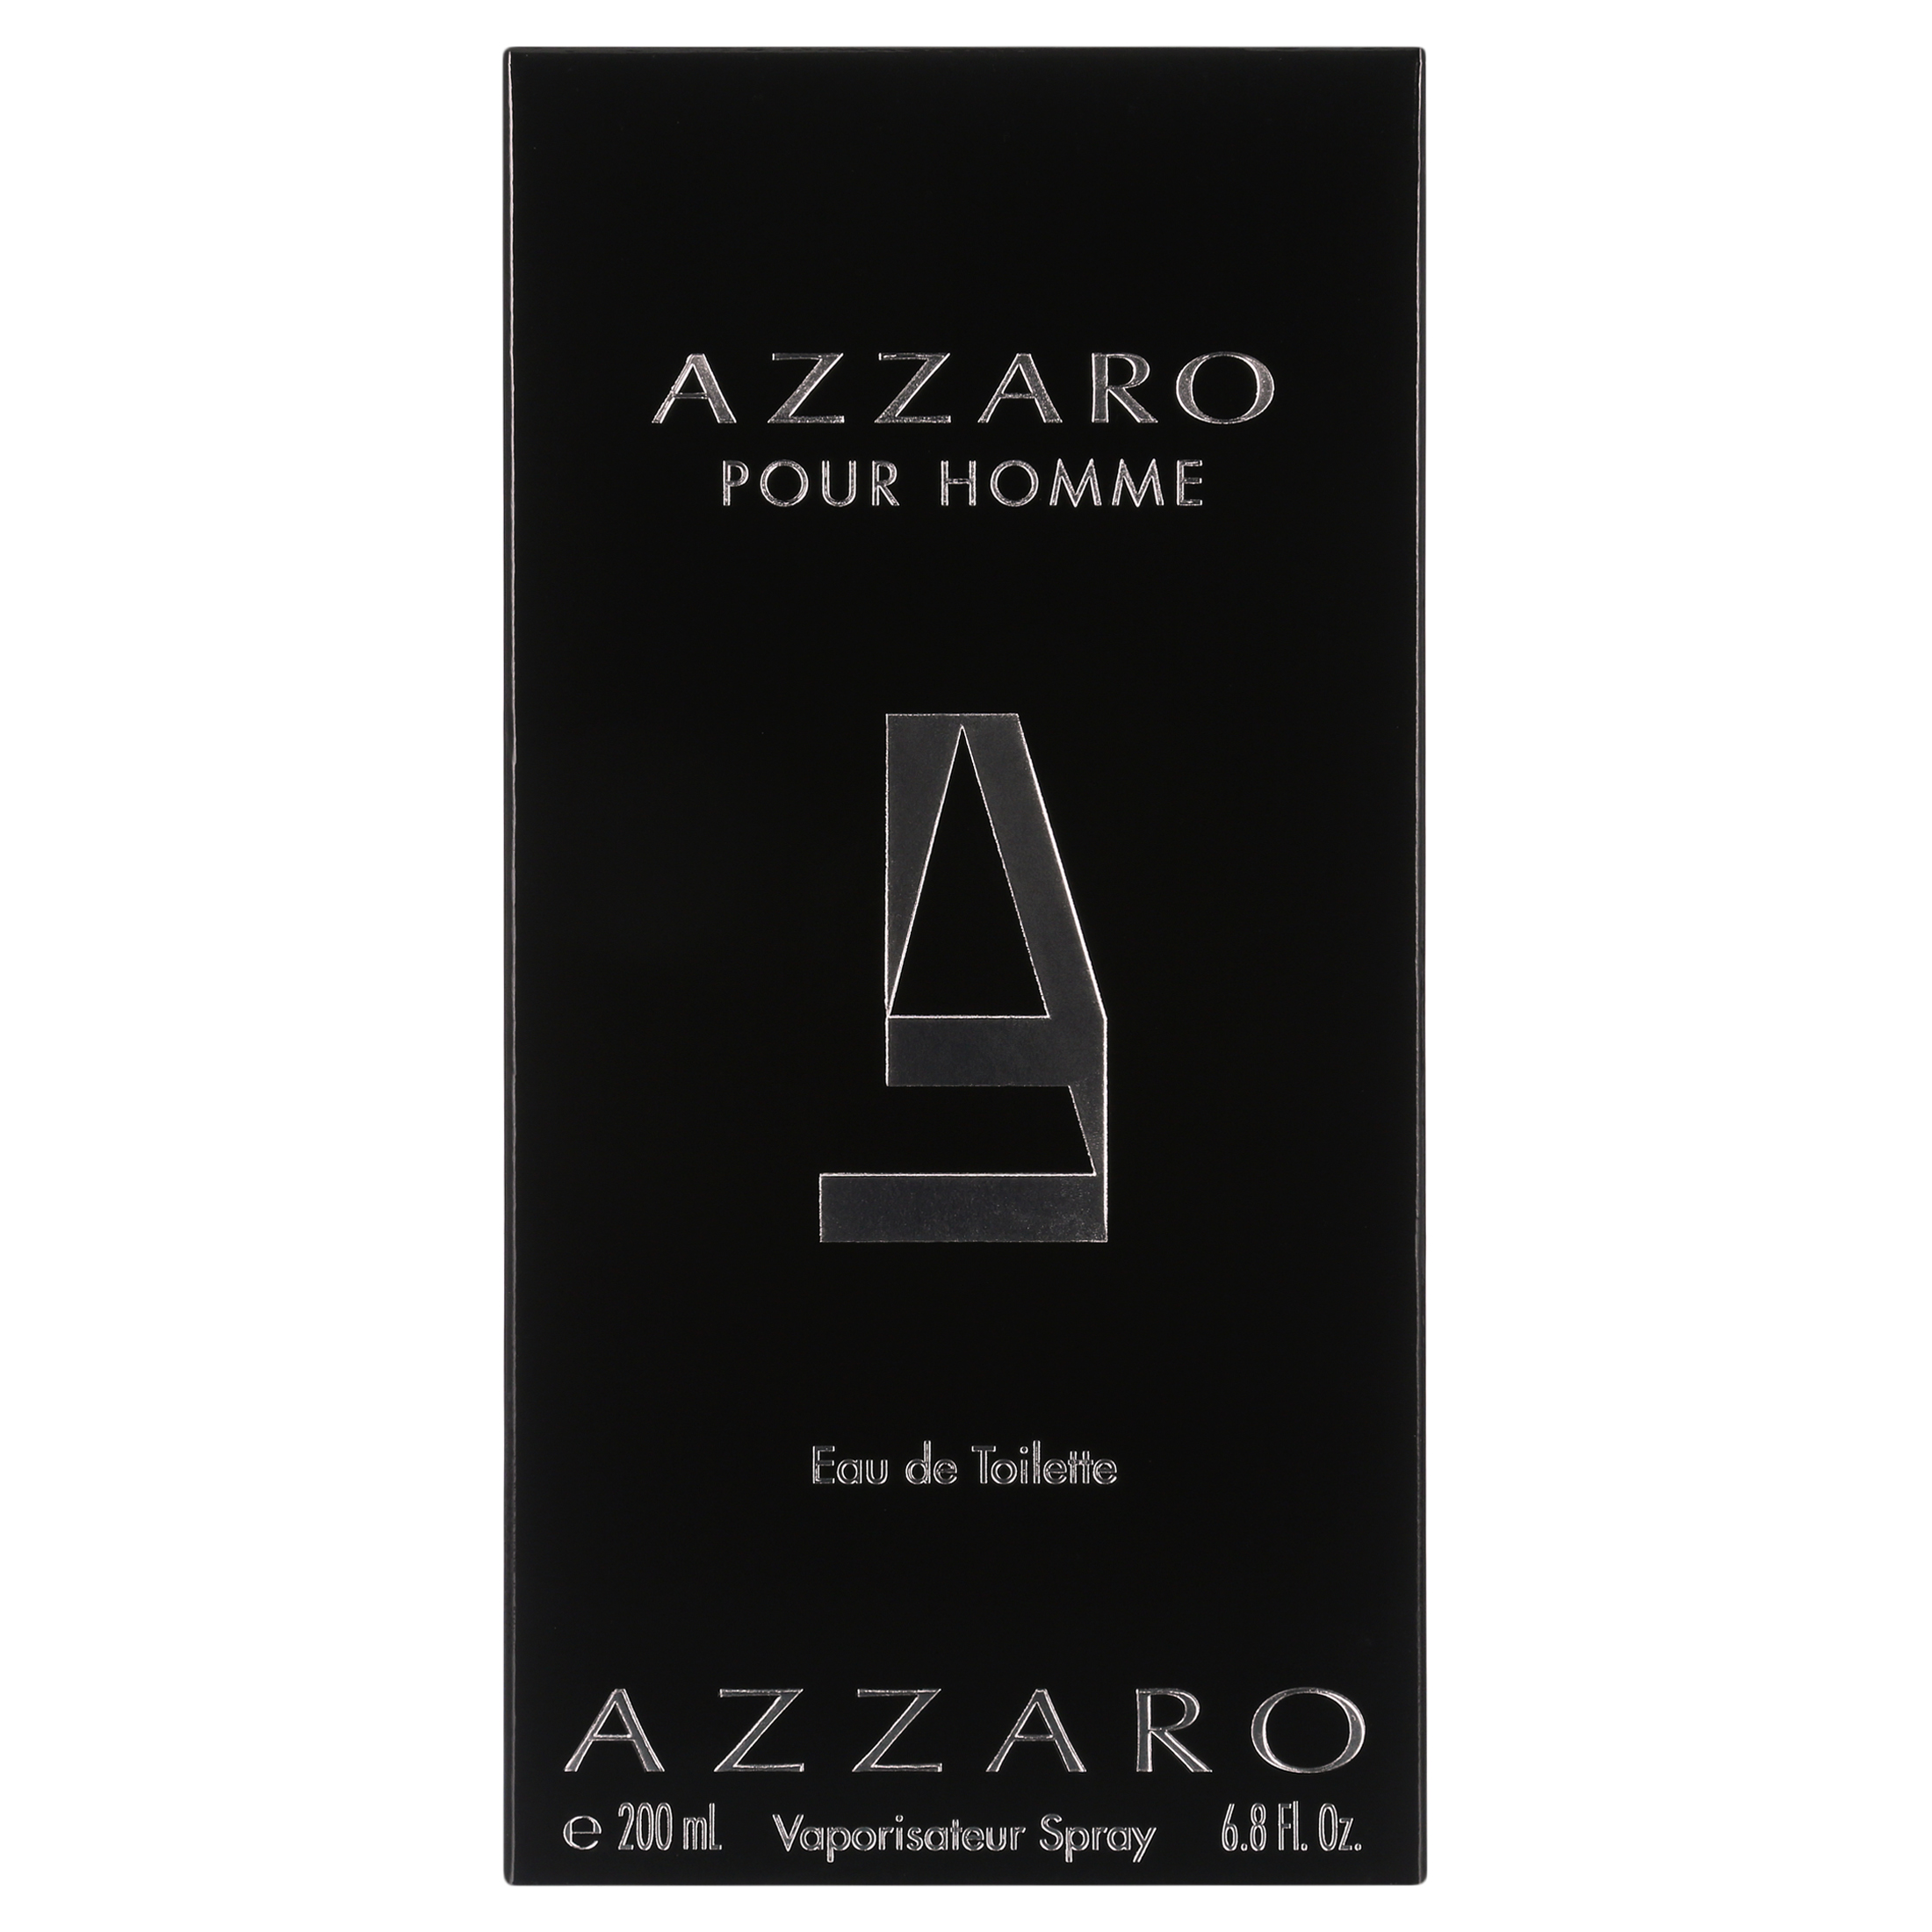 Azzaro Pour Home Cologne for Men, 6.7 Oz - image 4 of 7